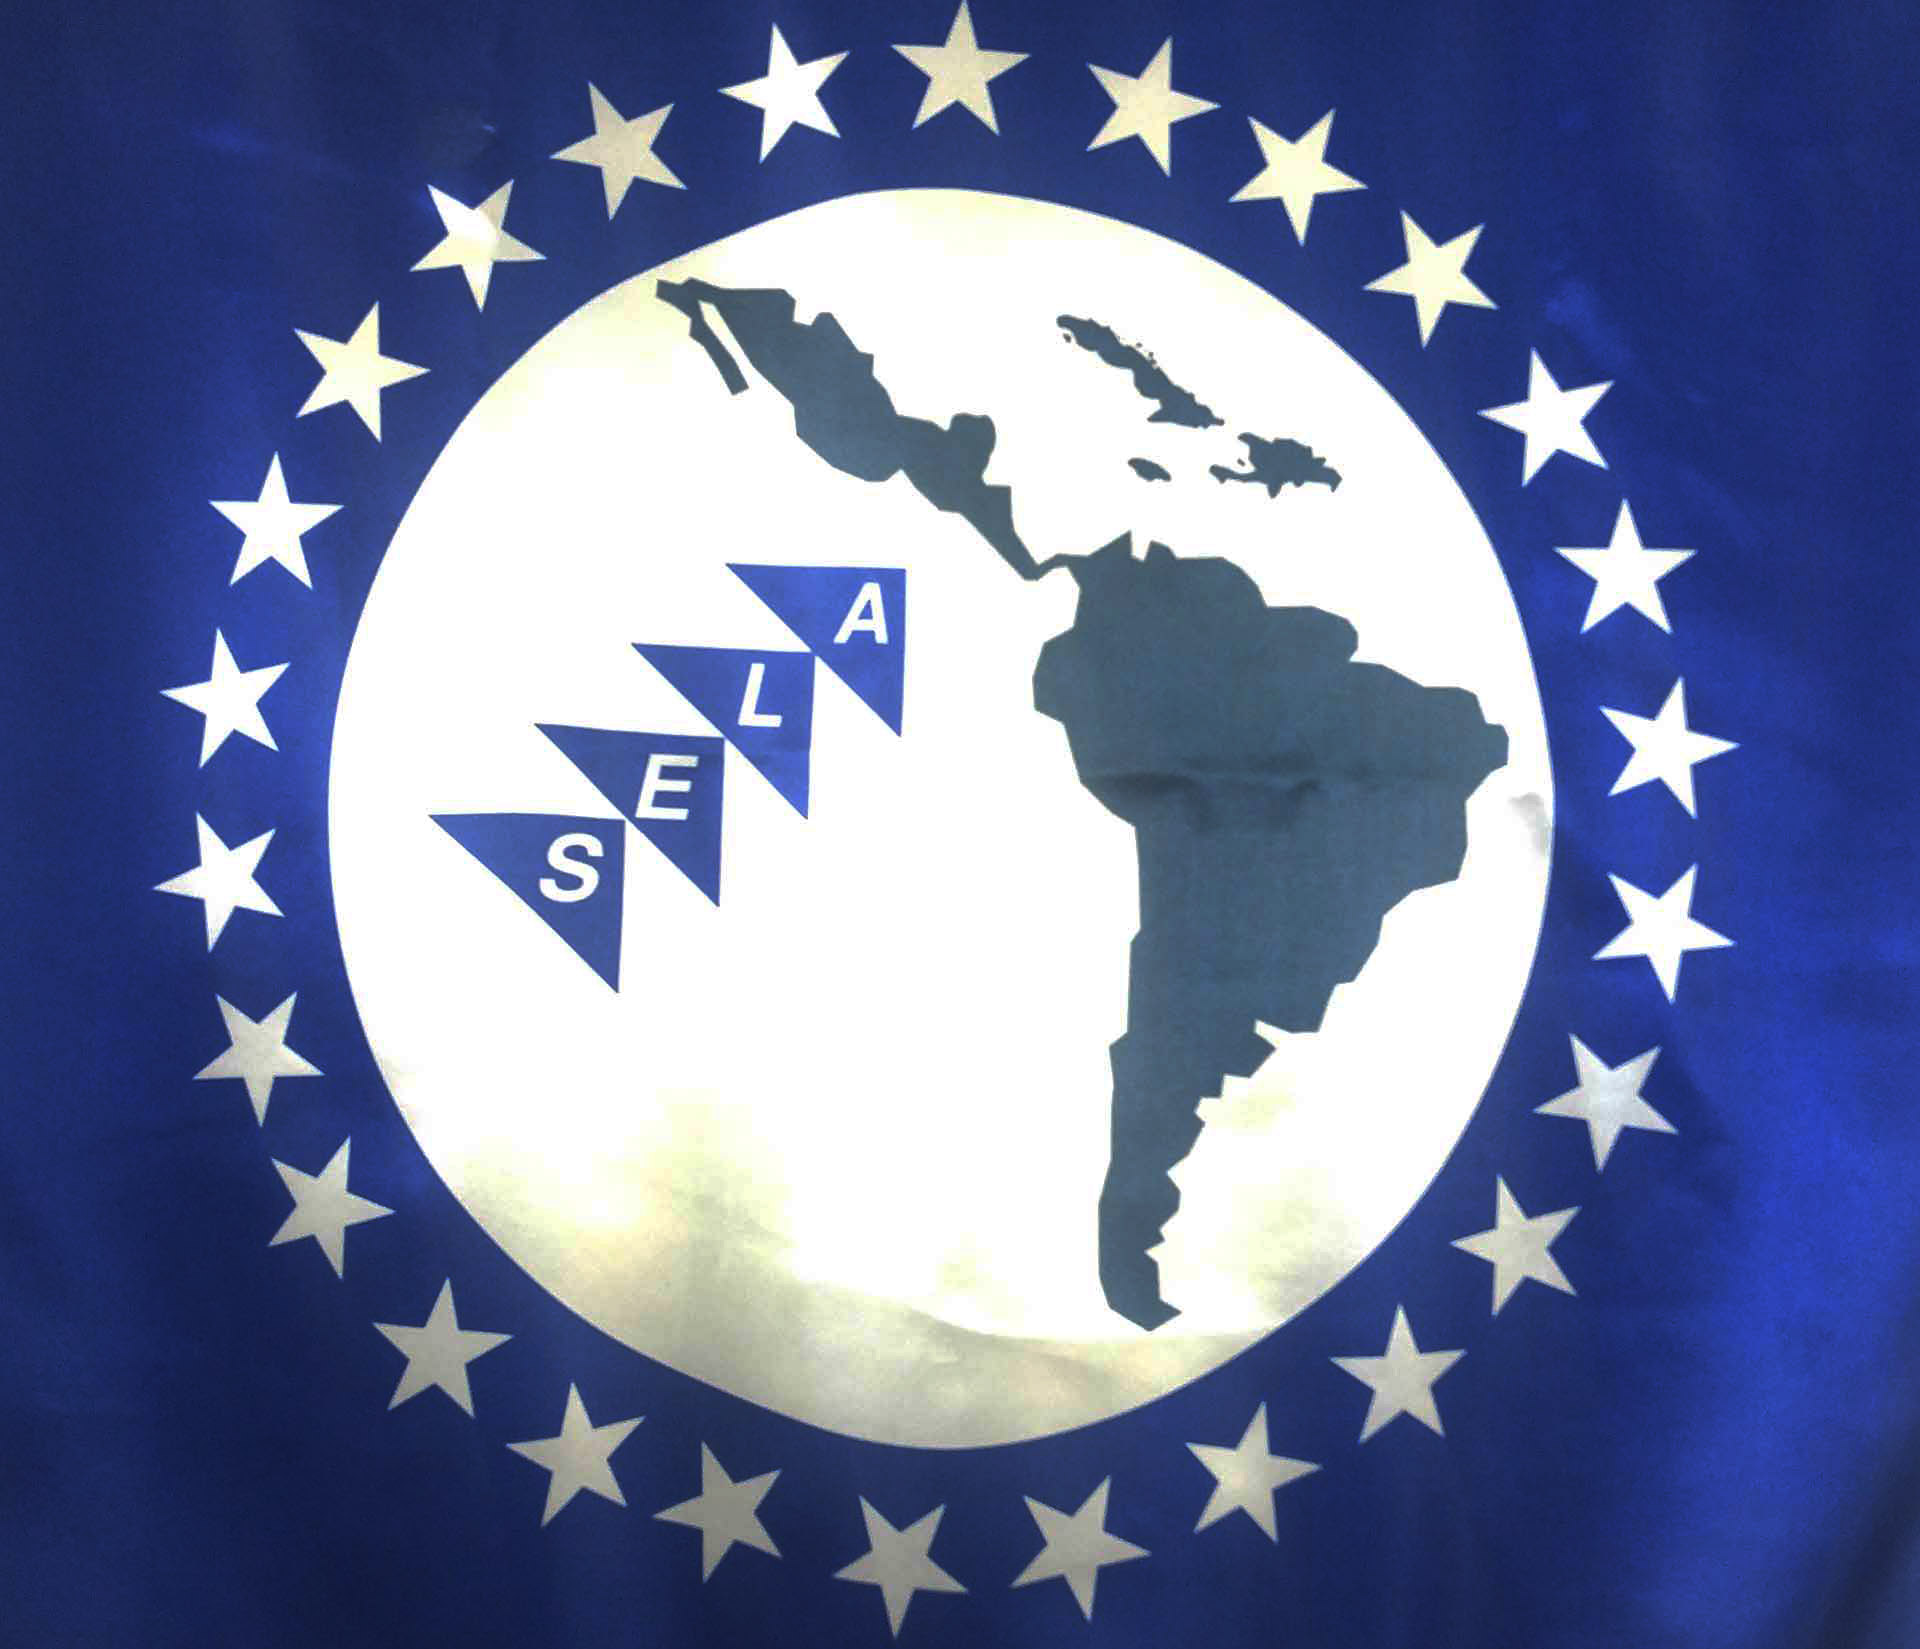 XLV Regular Meeting of the Latin American Council